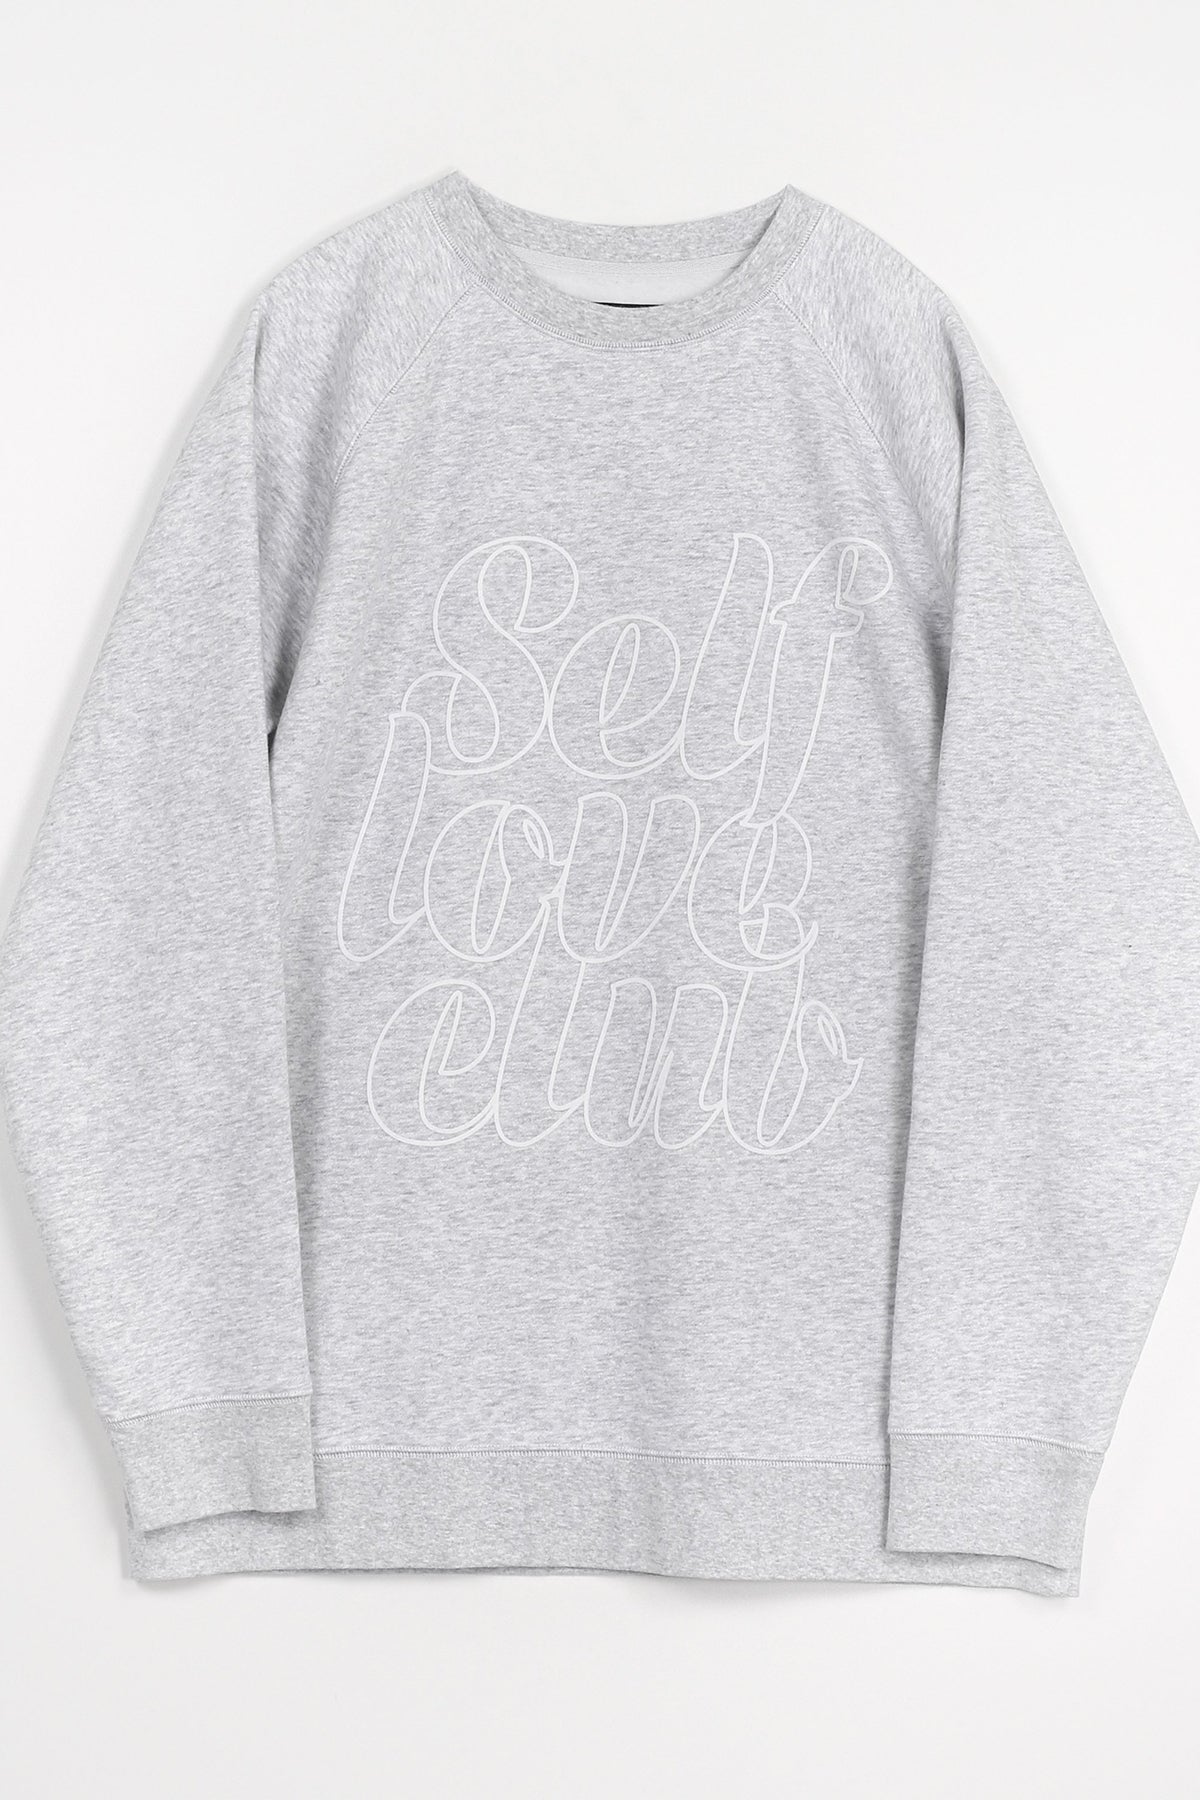 The "SELF LOVE" Big Sister Crew Neck Sweatshirt | Pebble Grey